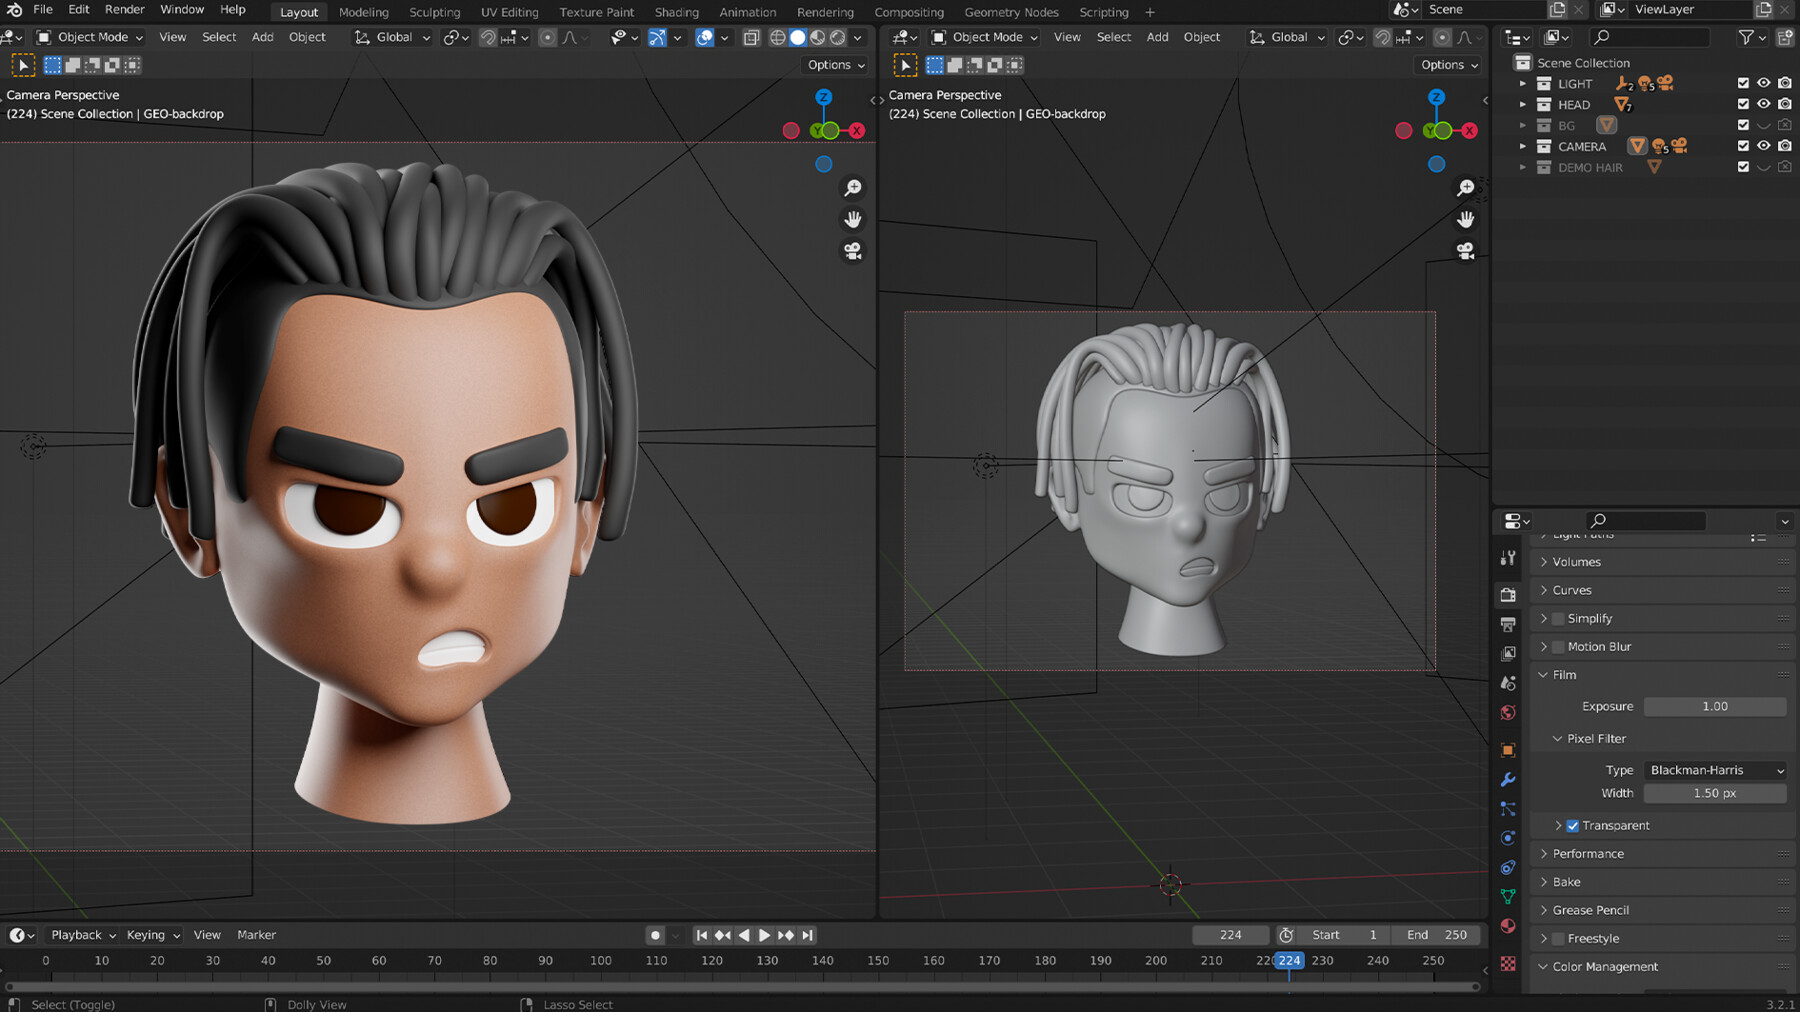 3D NFT Stylized Character Base Template In Blender 3D Model V2